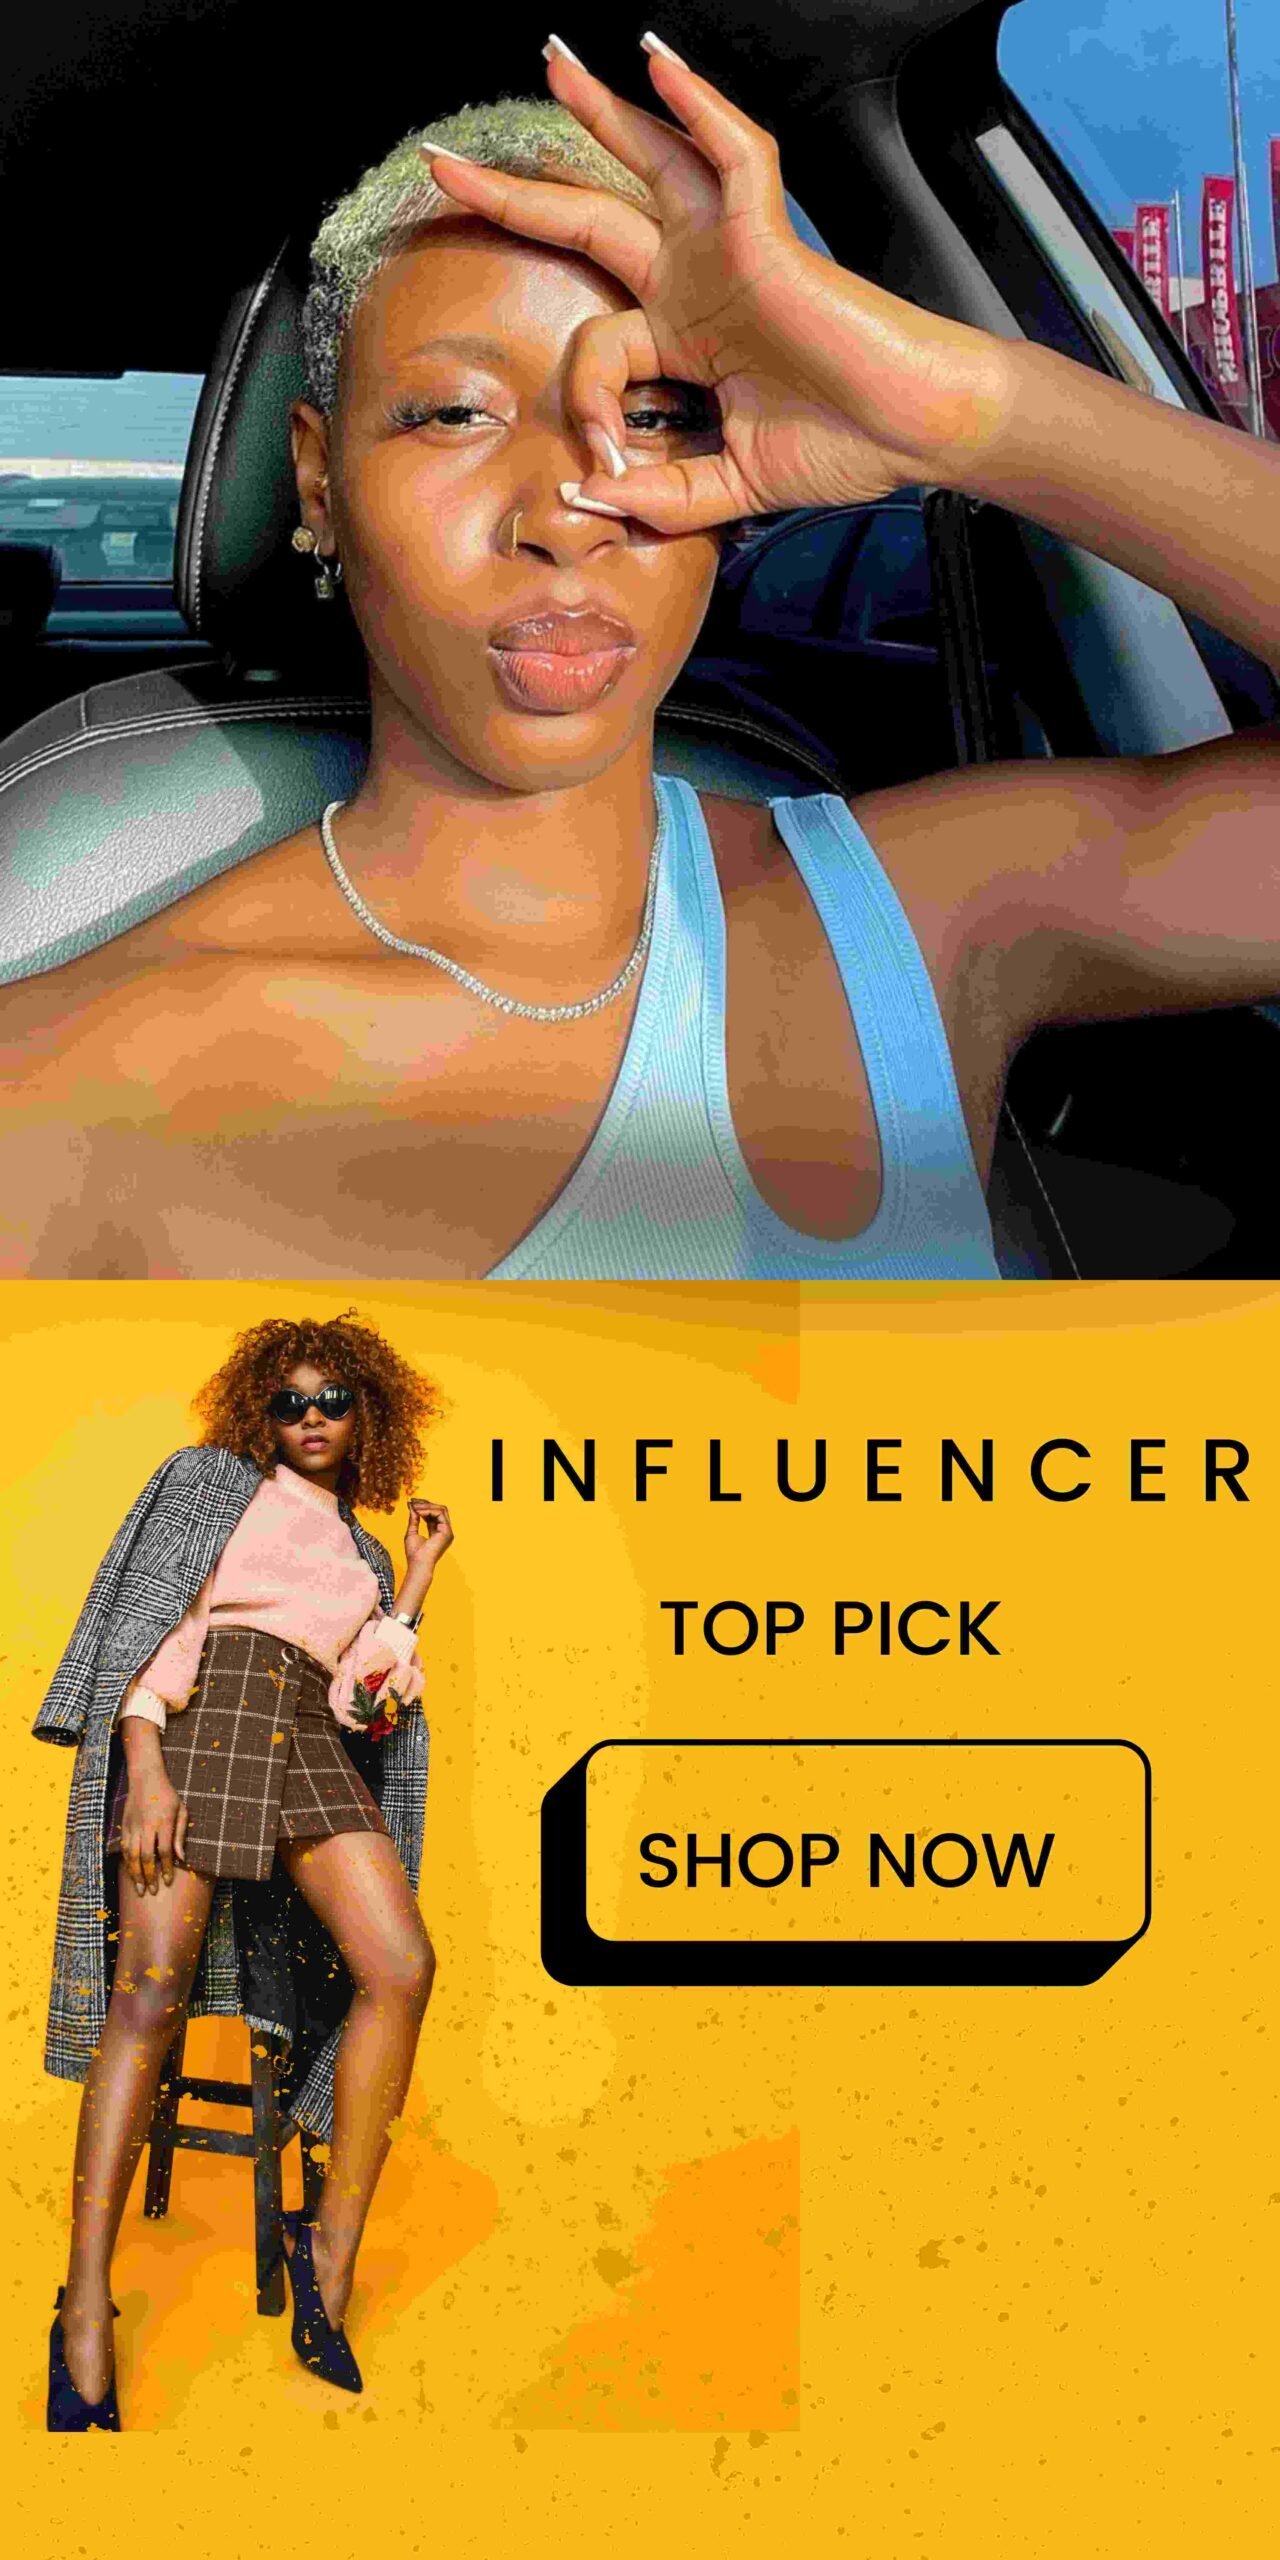 Influencer top pick